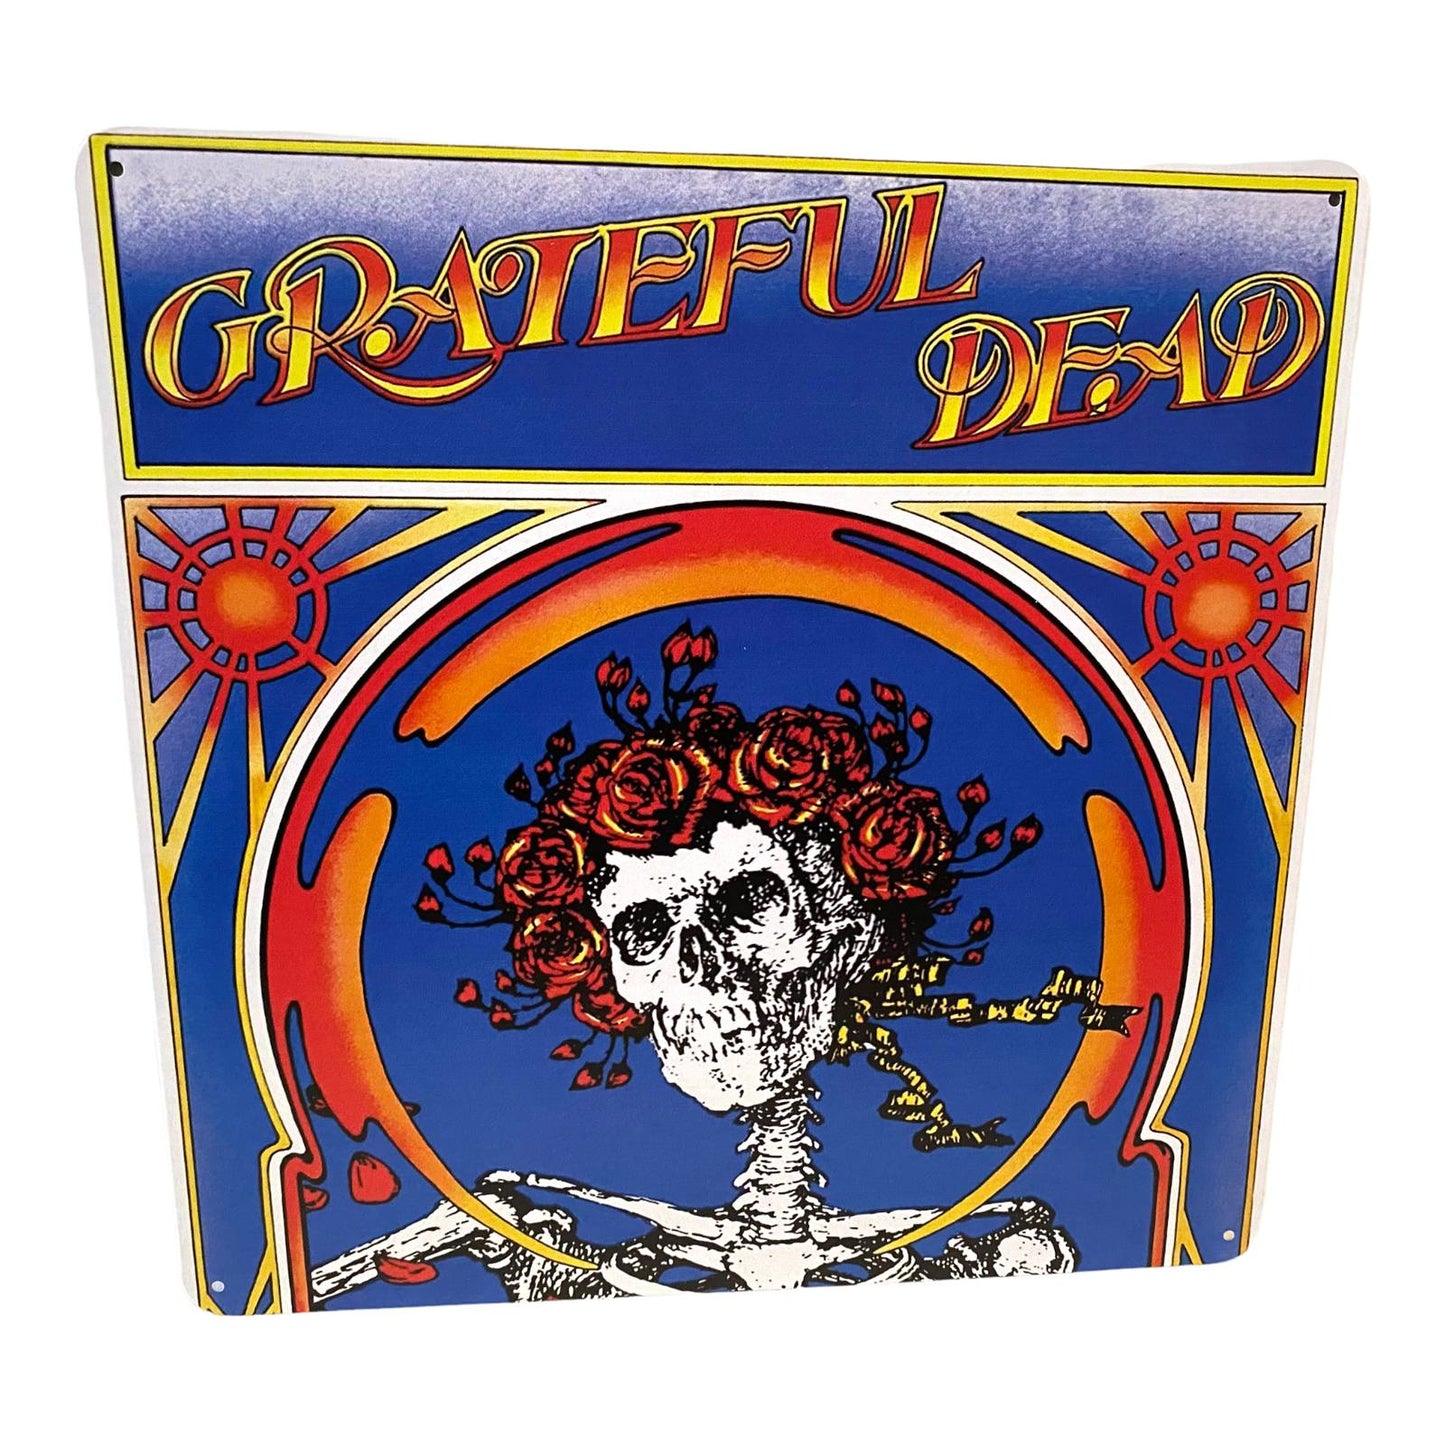 Grateful Dead - Skull and Roses Album Cover Metal Print Tin Sign 12"x 12"